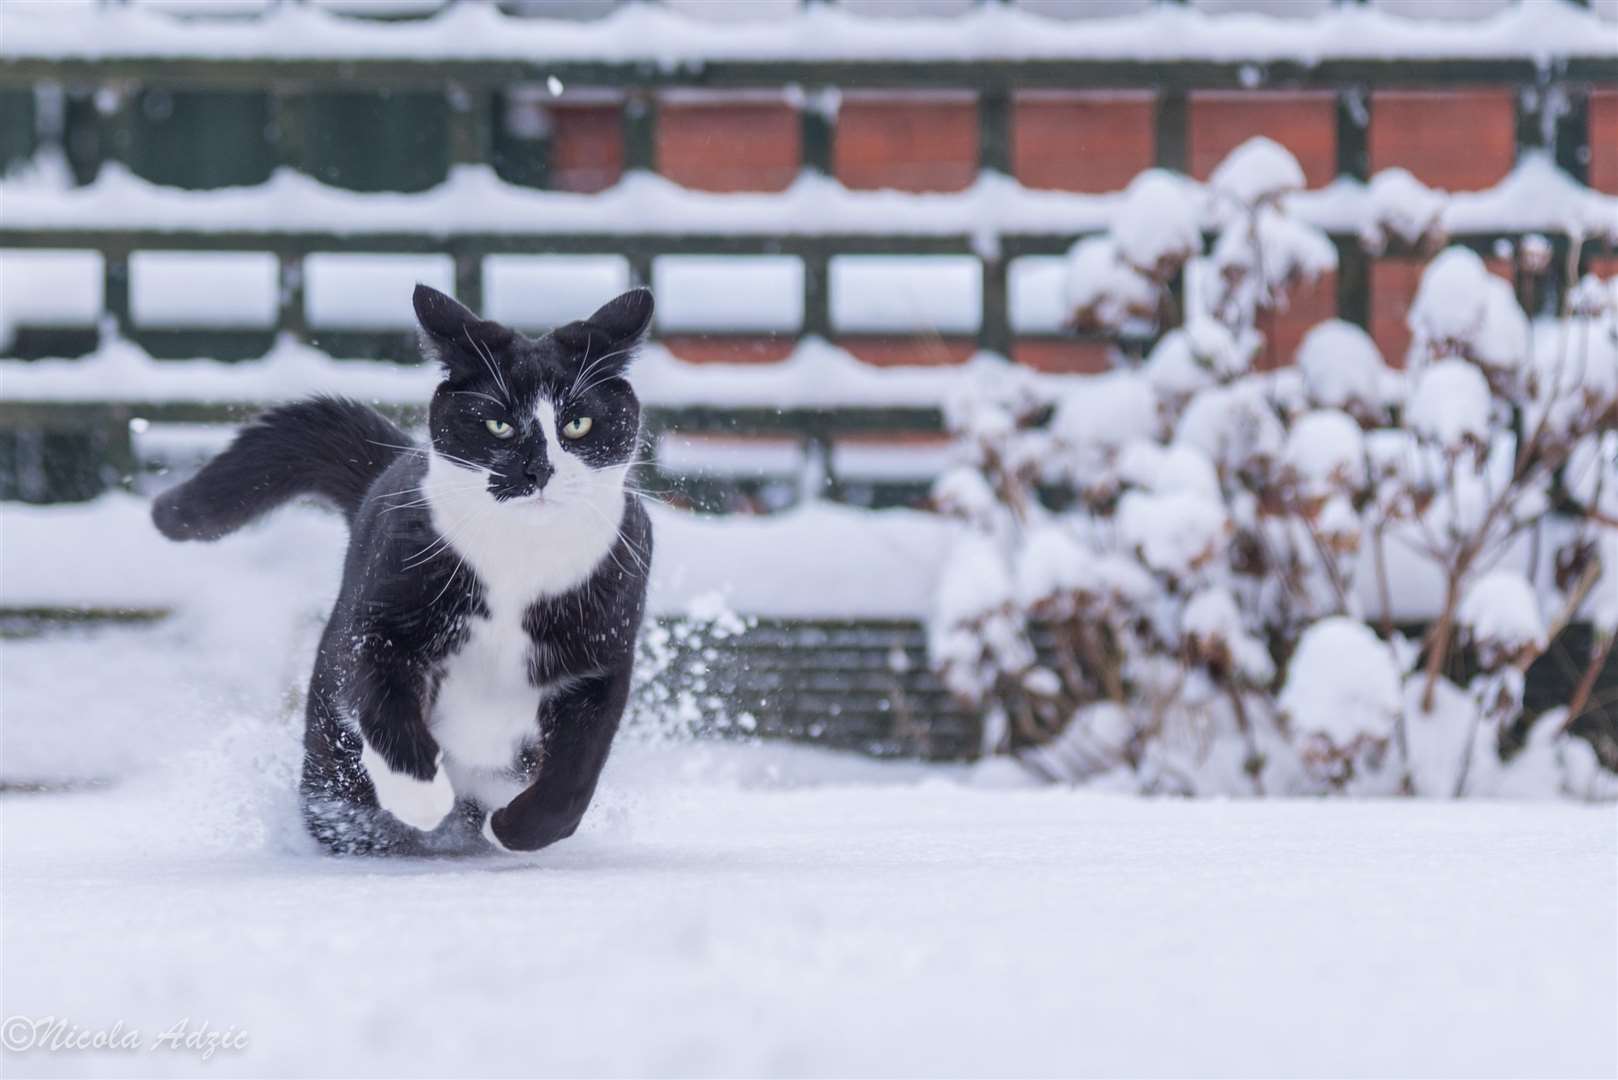 Elmo the cat in the snow in Sittingbourne last year. Picture: Nicola Adzic